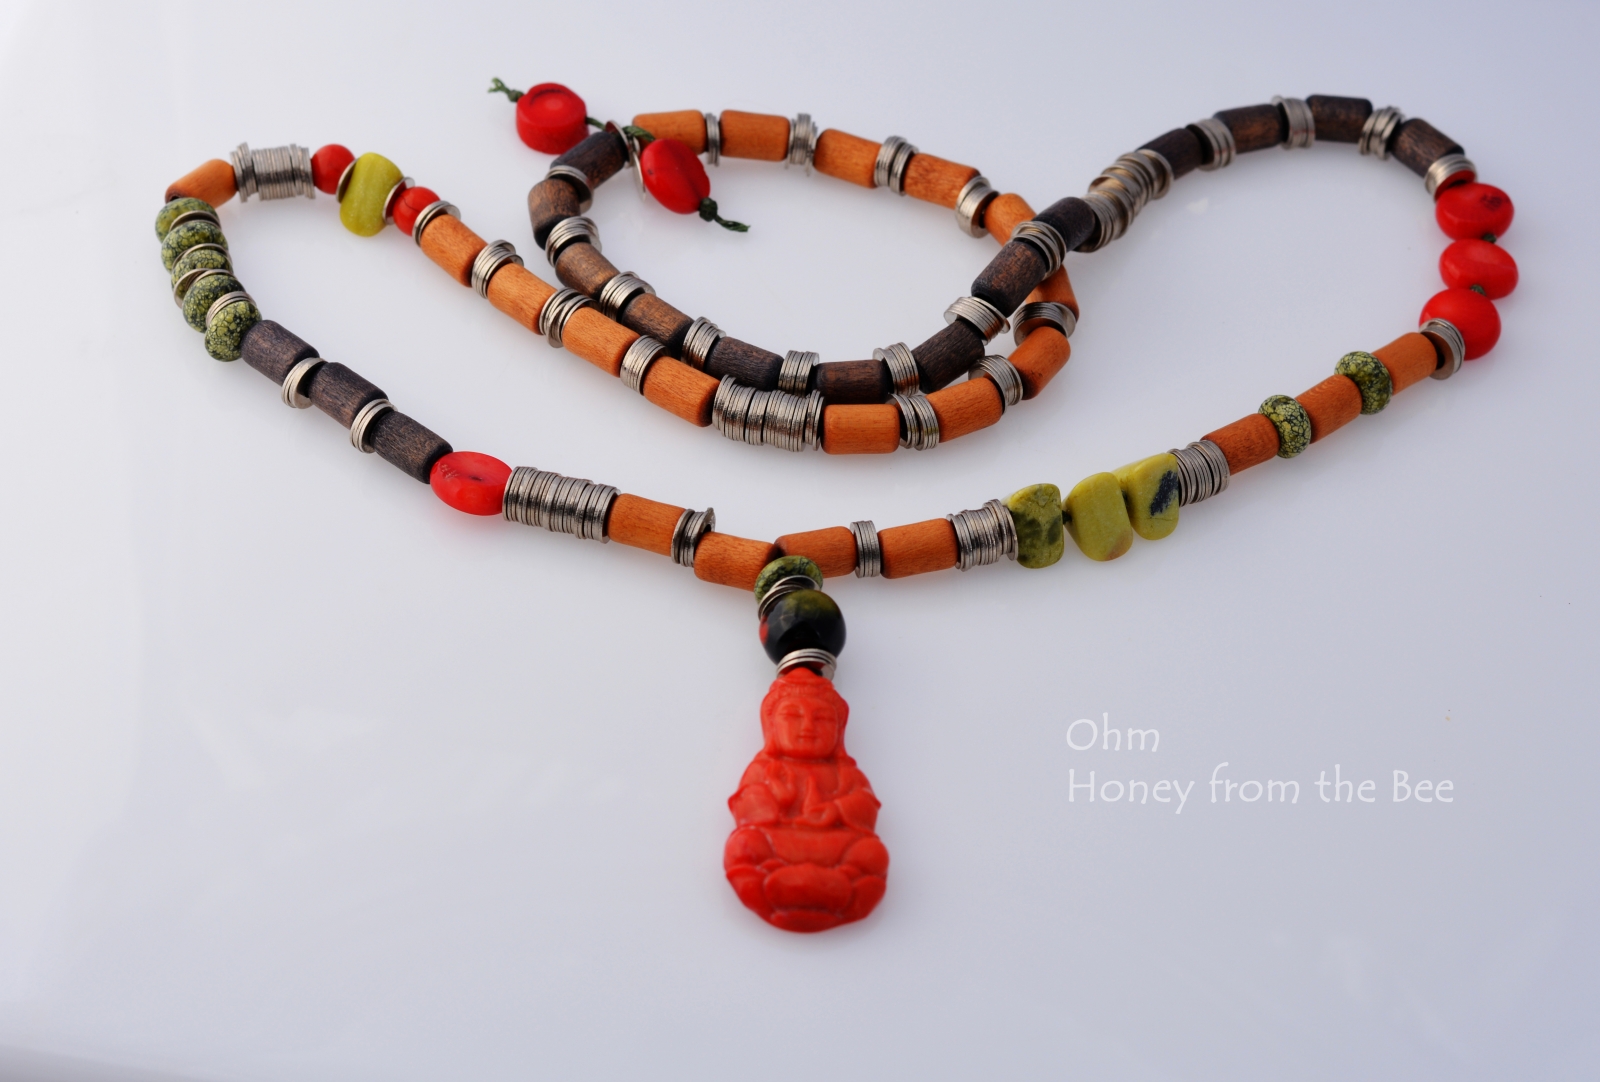 Ohm Buddha necklace